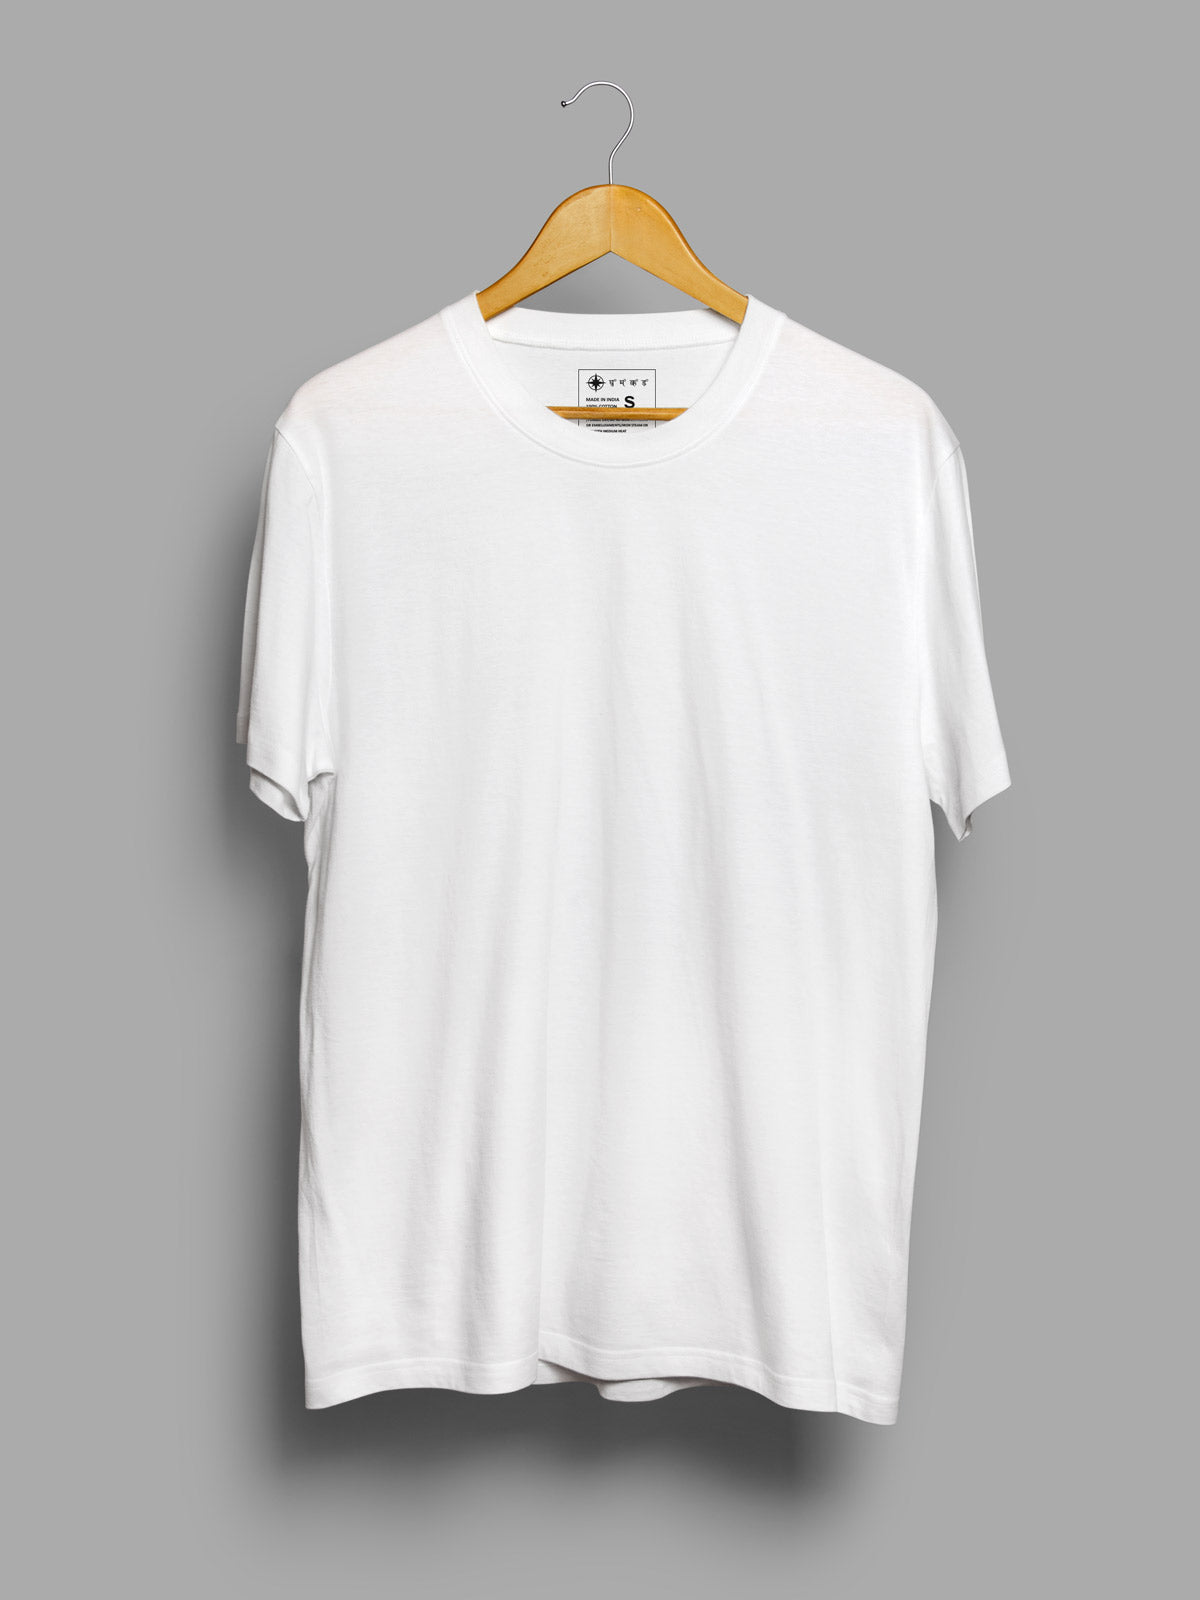 White-t-shirt-for-men by Ghumakkad